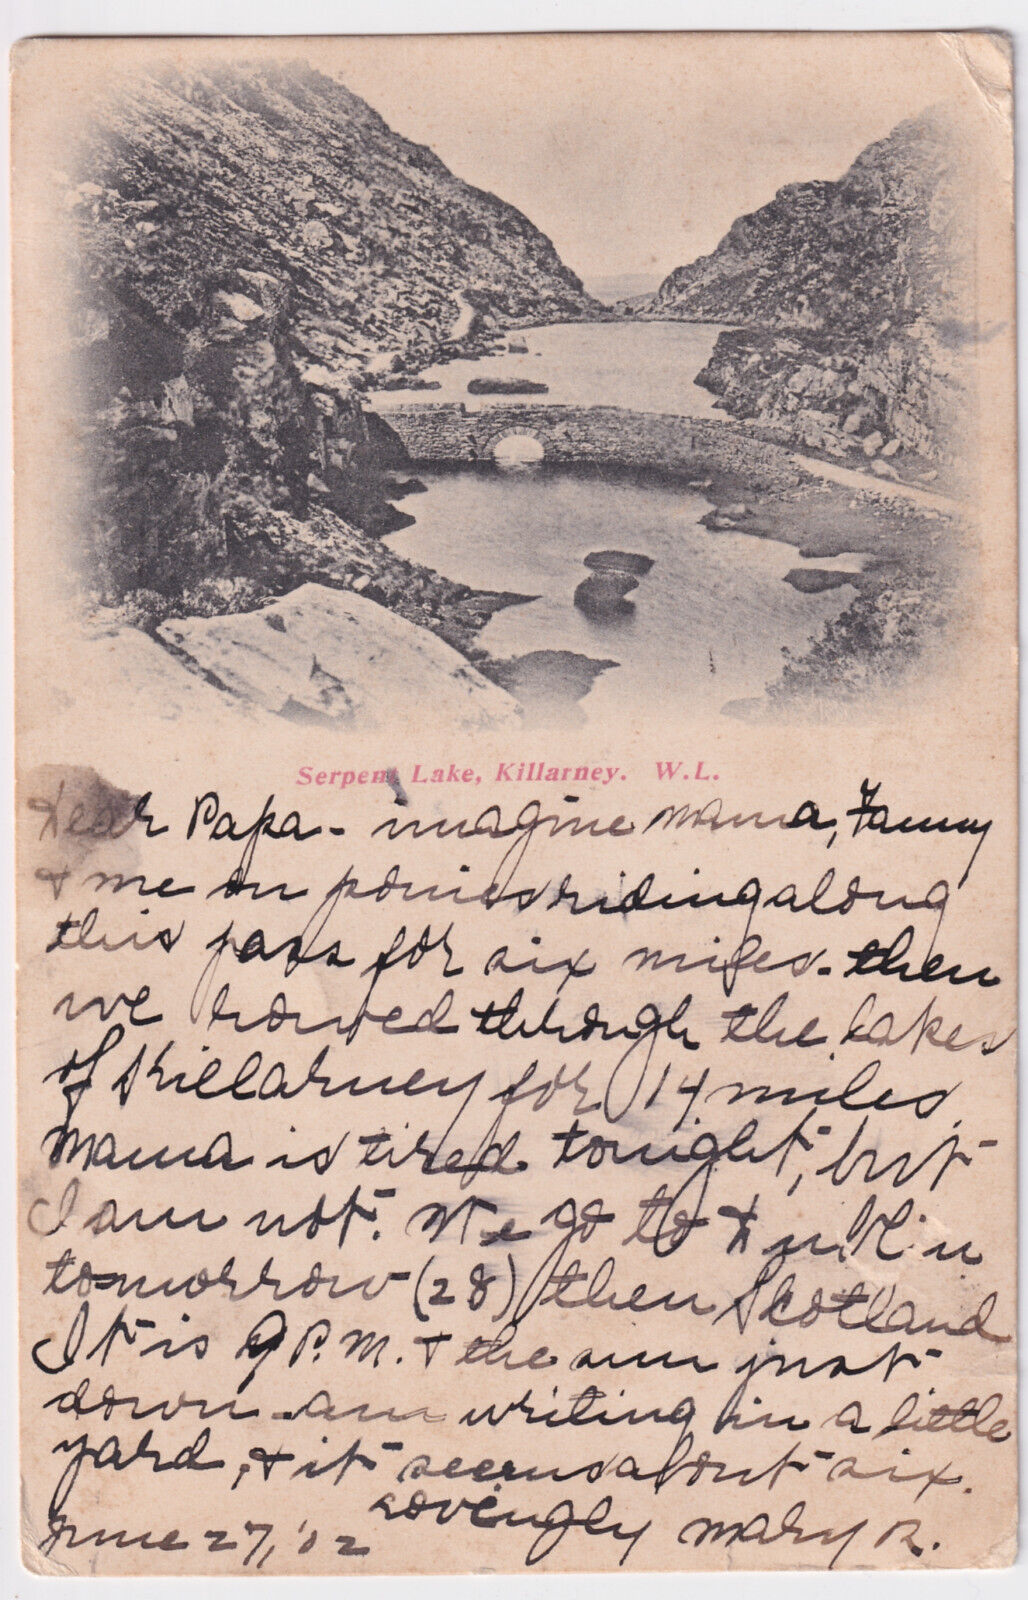 IRELAND KILLARNEY W.L. SERPENT LAKE 1902 TO R.C. HOPKINS, OCEAN CITY MARYLAND